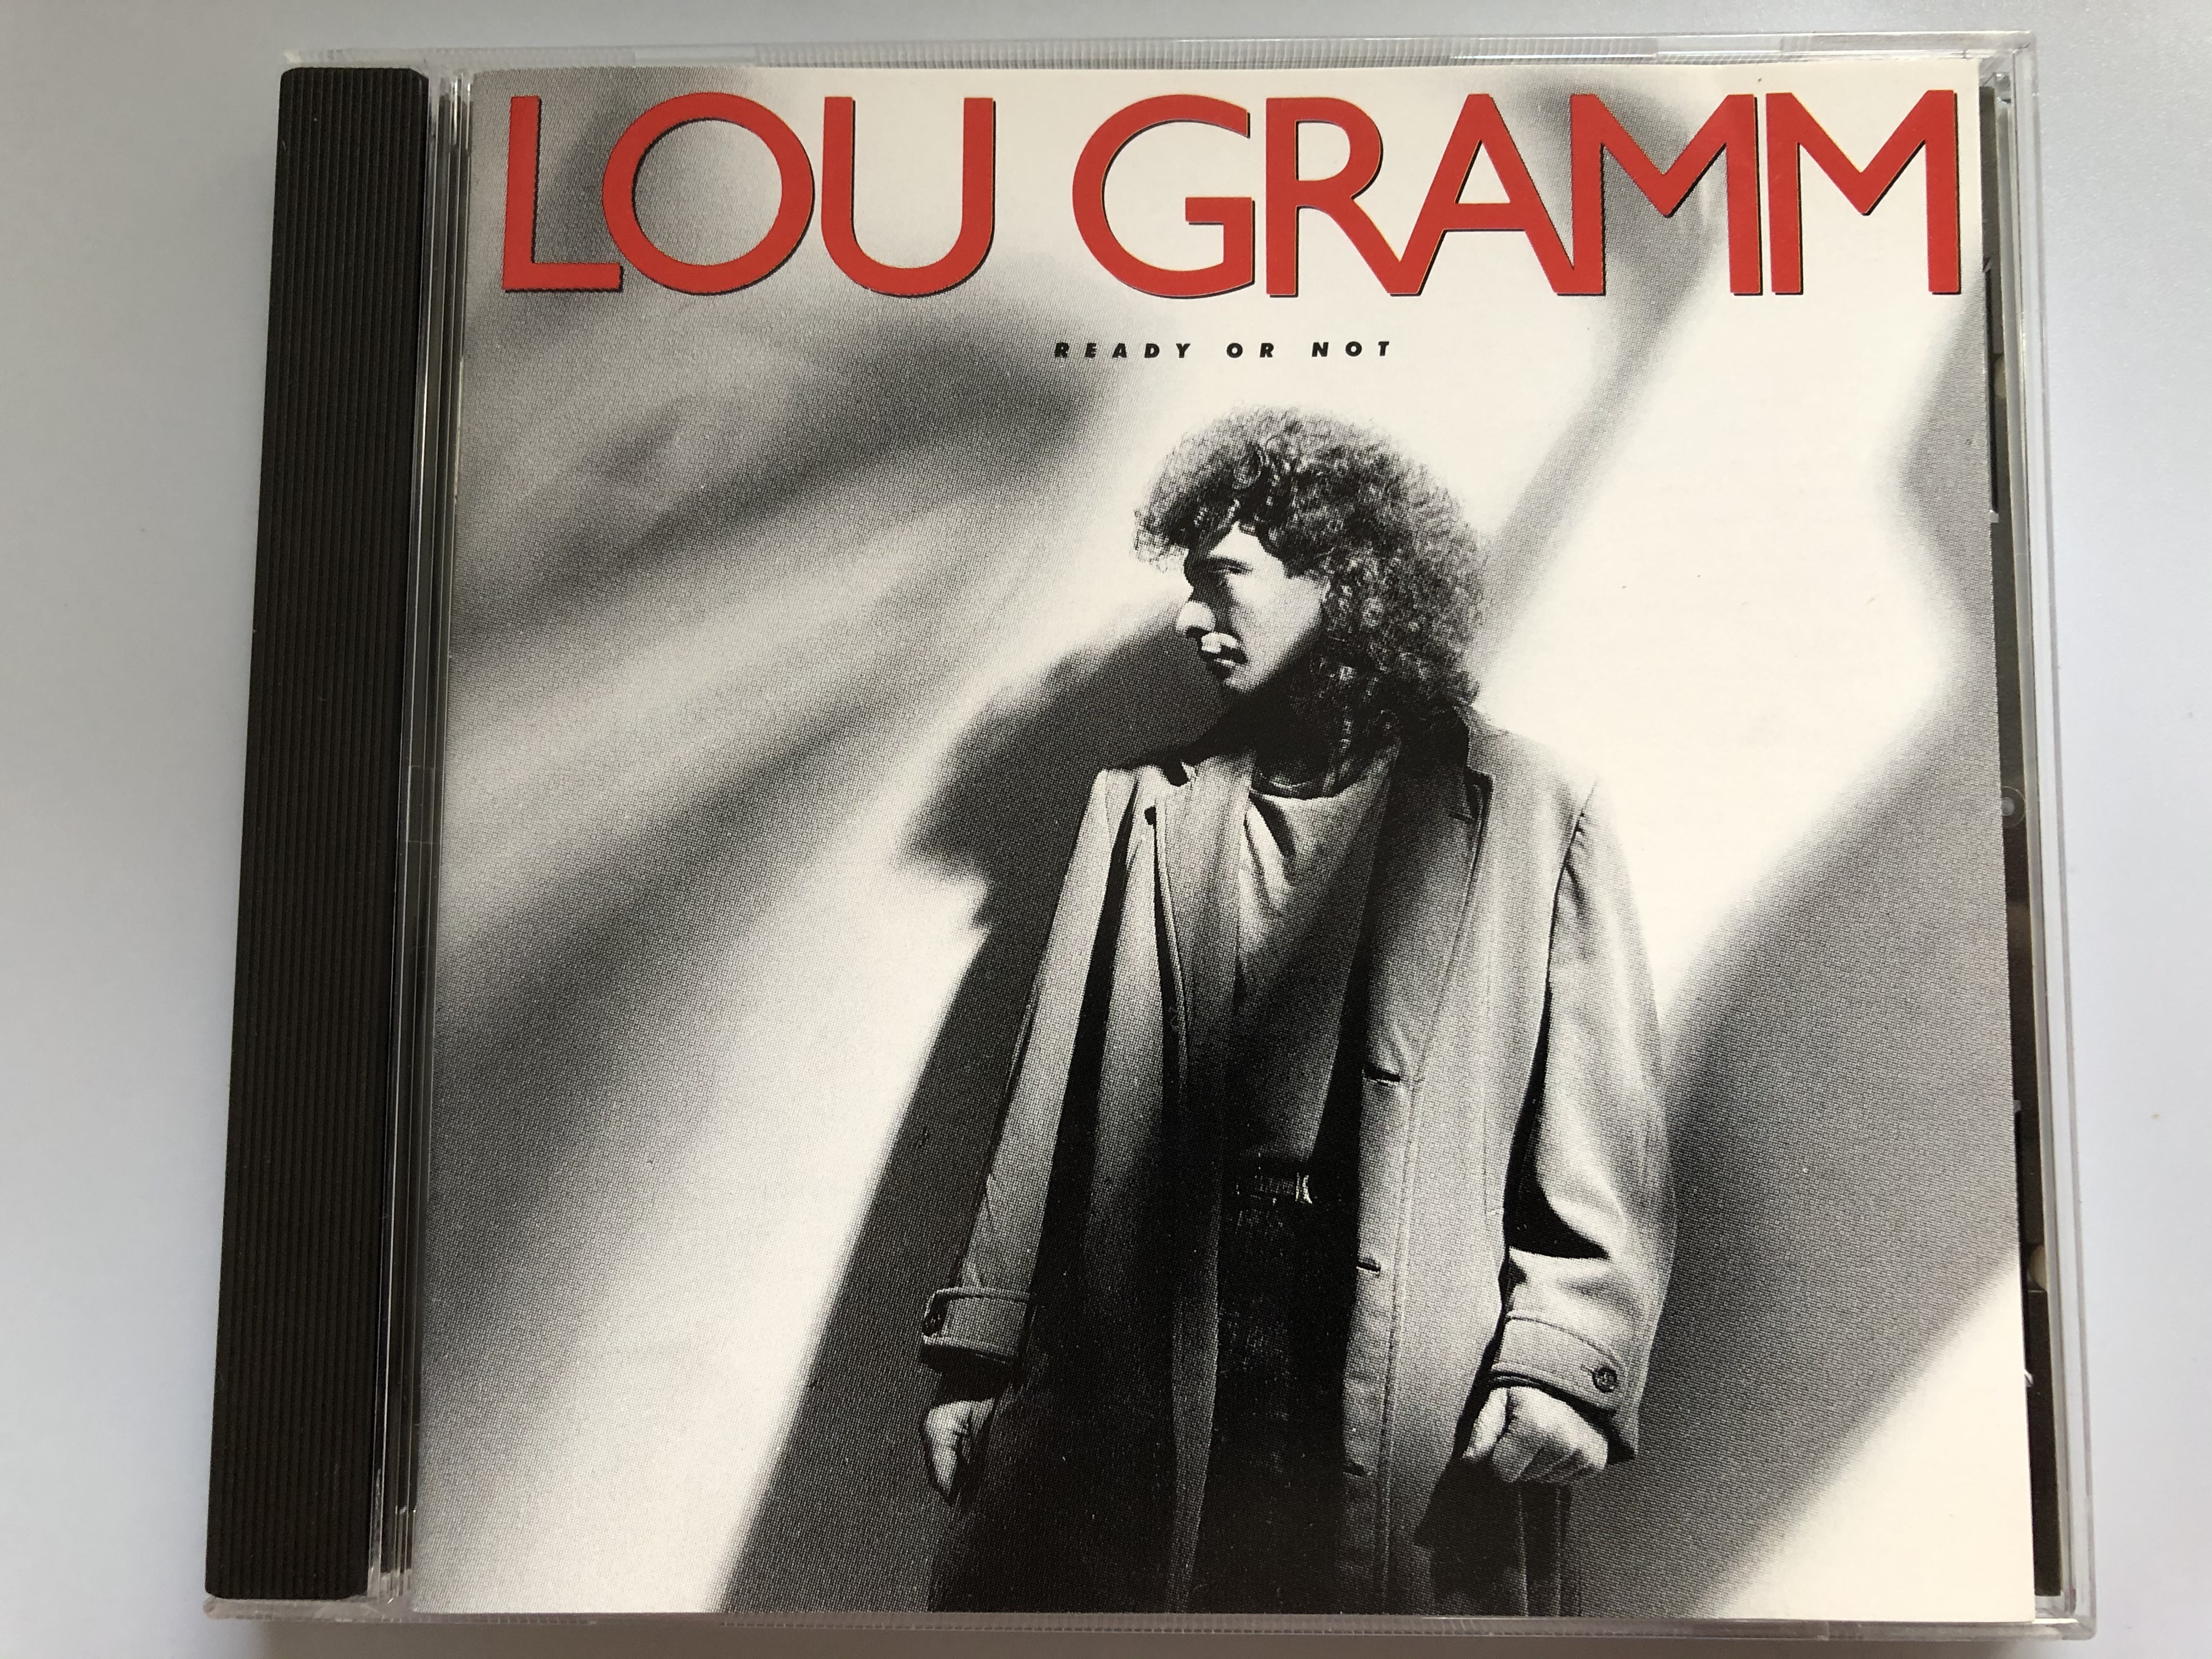 lou-gramm-ready-or-not-atlantic-audio-cd-1987-7567-81728-2-1-.jpg